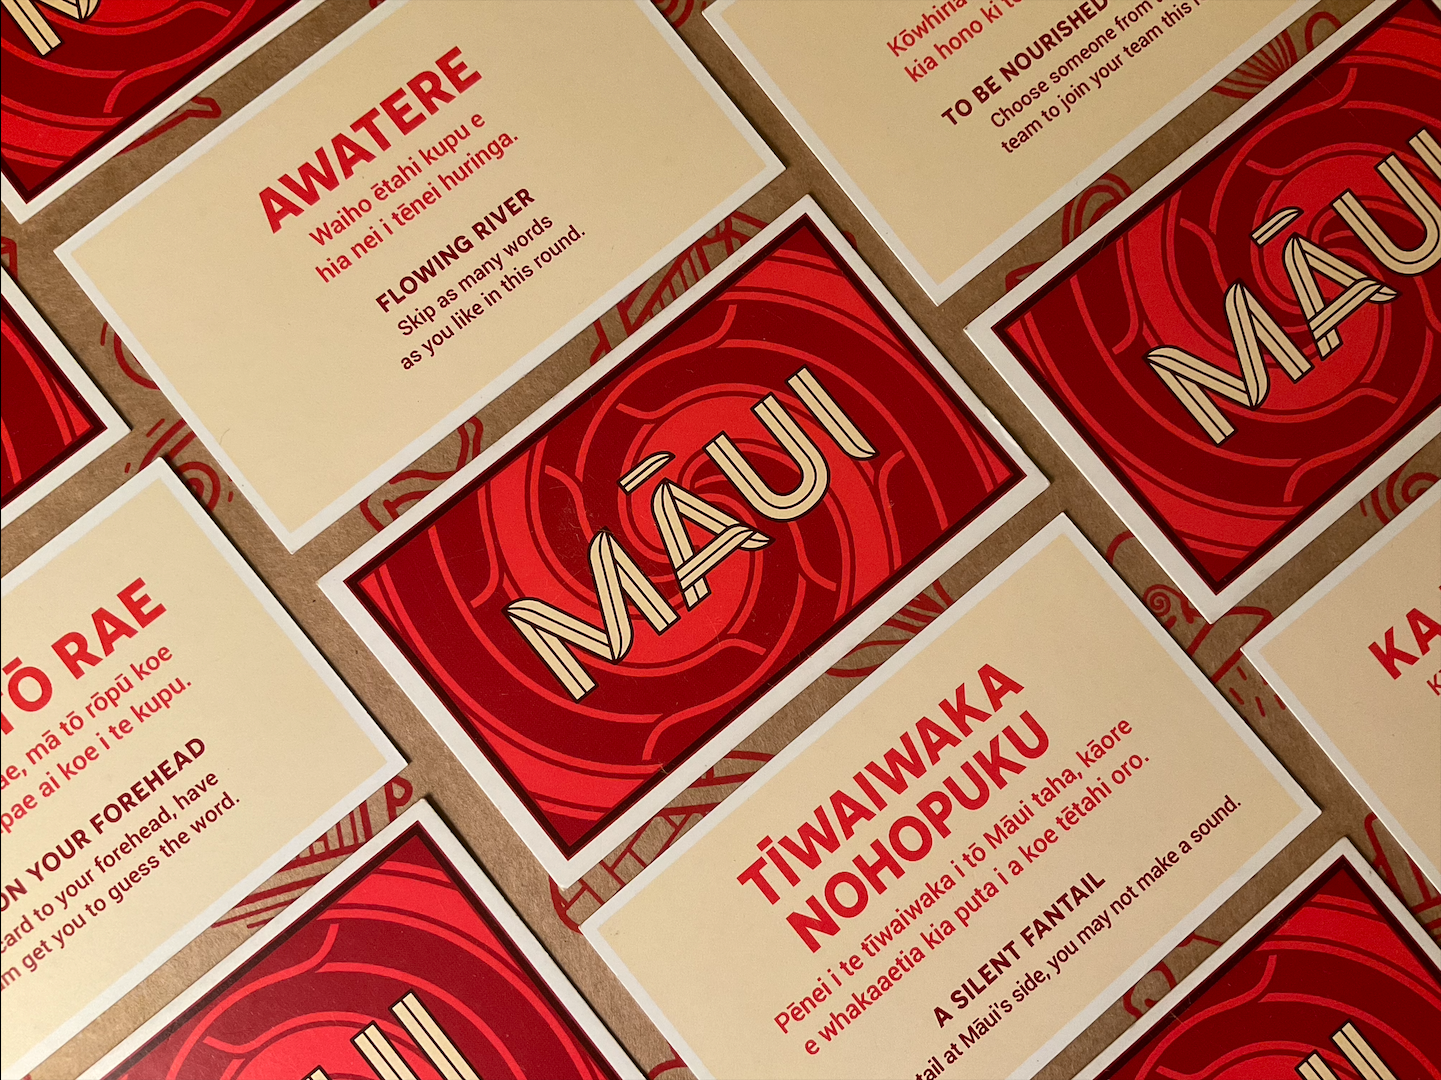 māui cards kāri kaupapa game kura rēhia māori language board game tākaro Māori takaro maimoa creative hemi kelly kuruho wereta rosie remmerswaal play language revitalisation